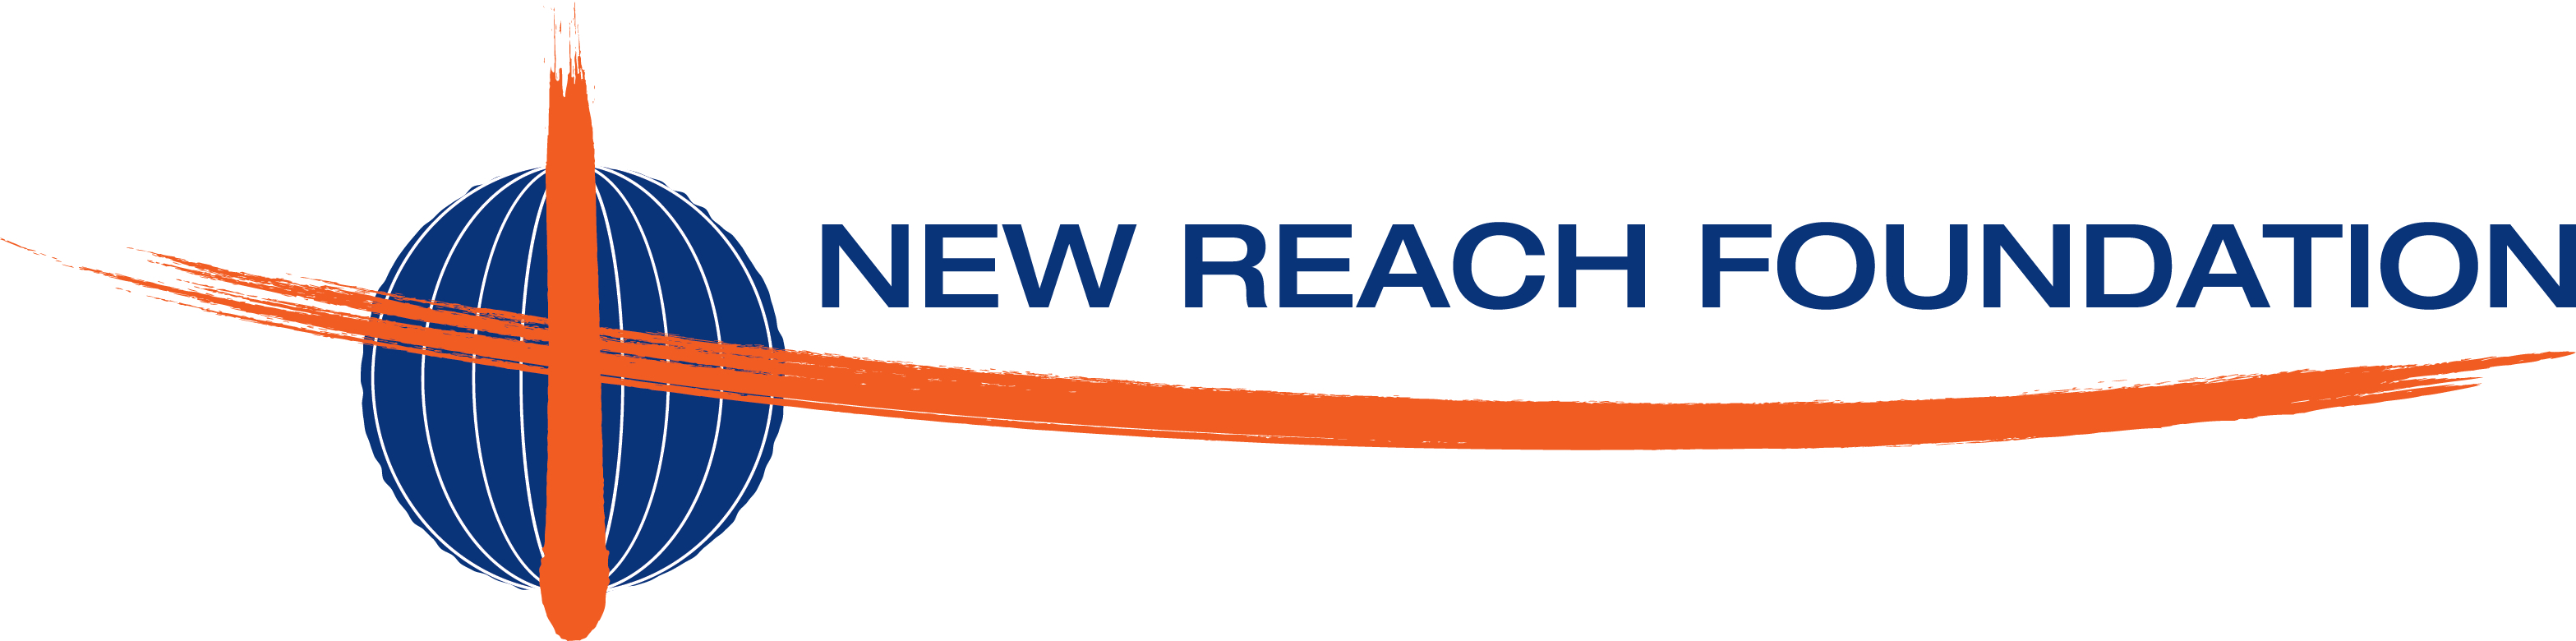 New Reach Foundation logo